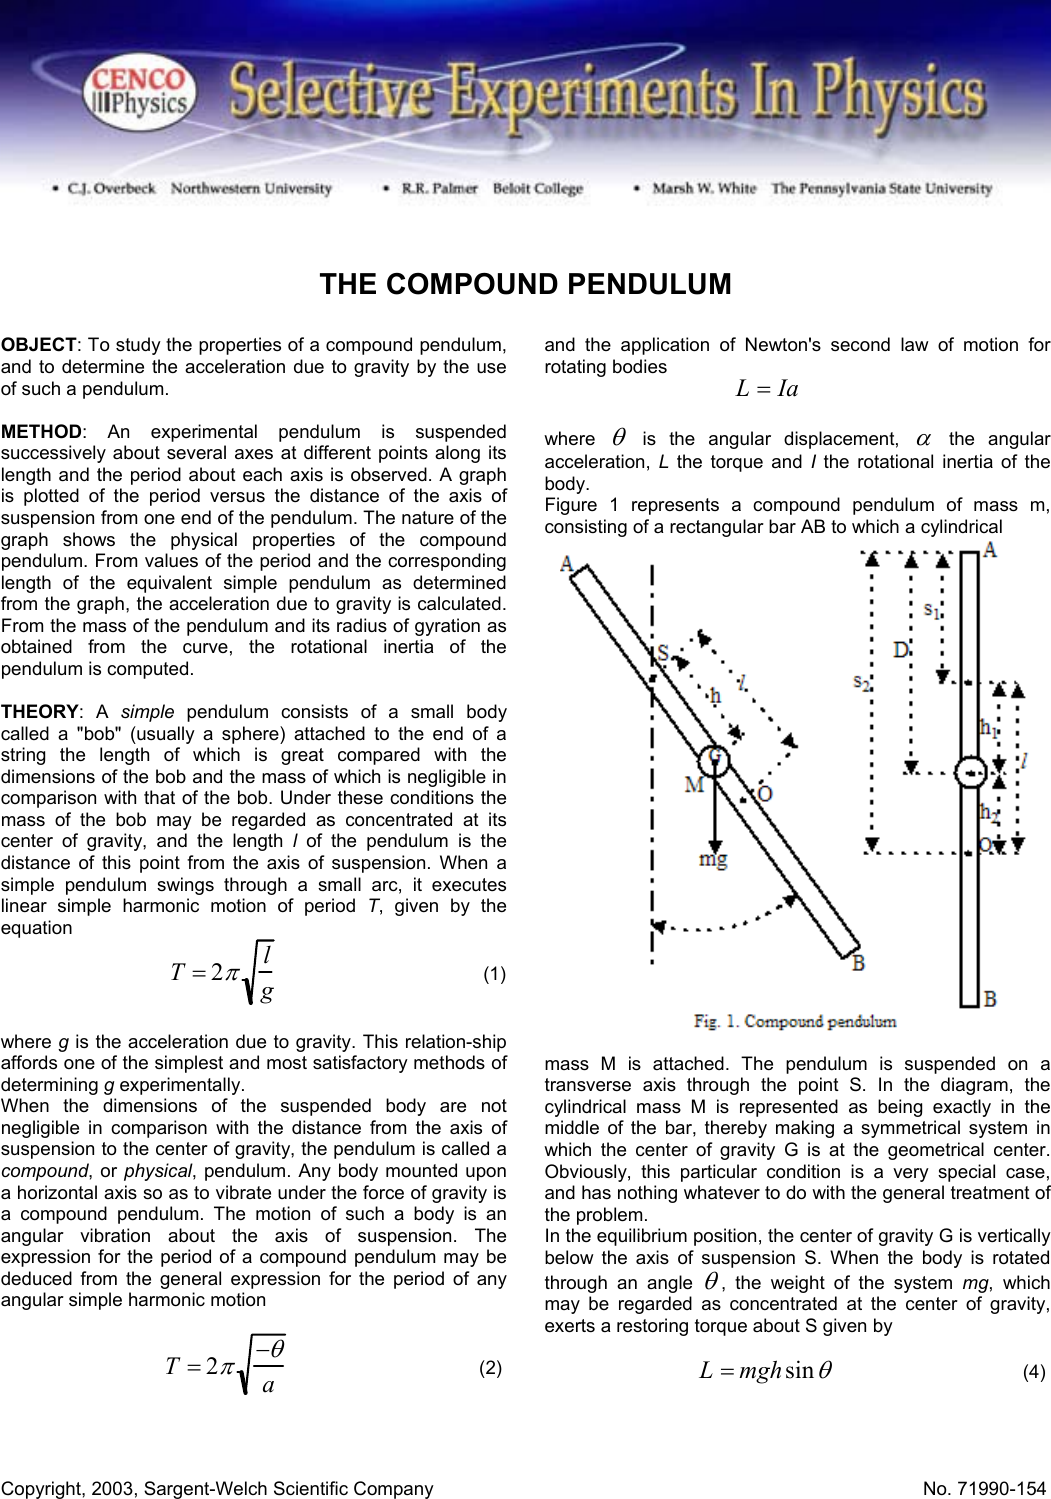 Page 1 of 4 - B 01 CENCO Compound Pendulum Manual